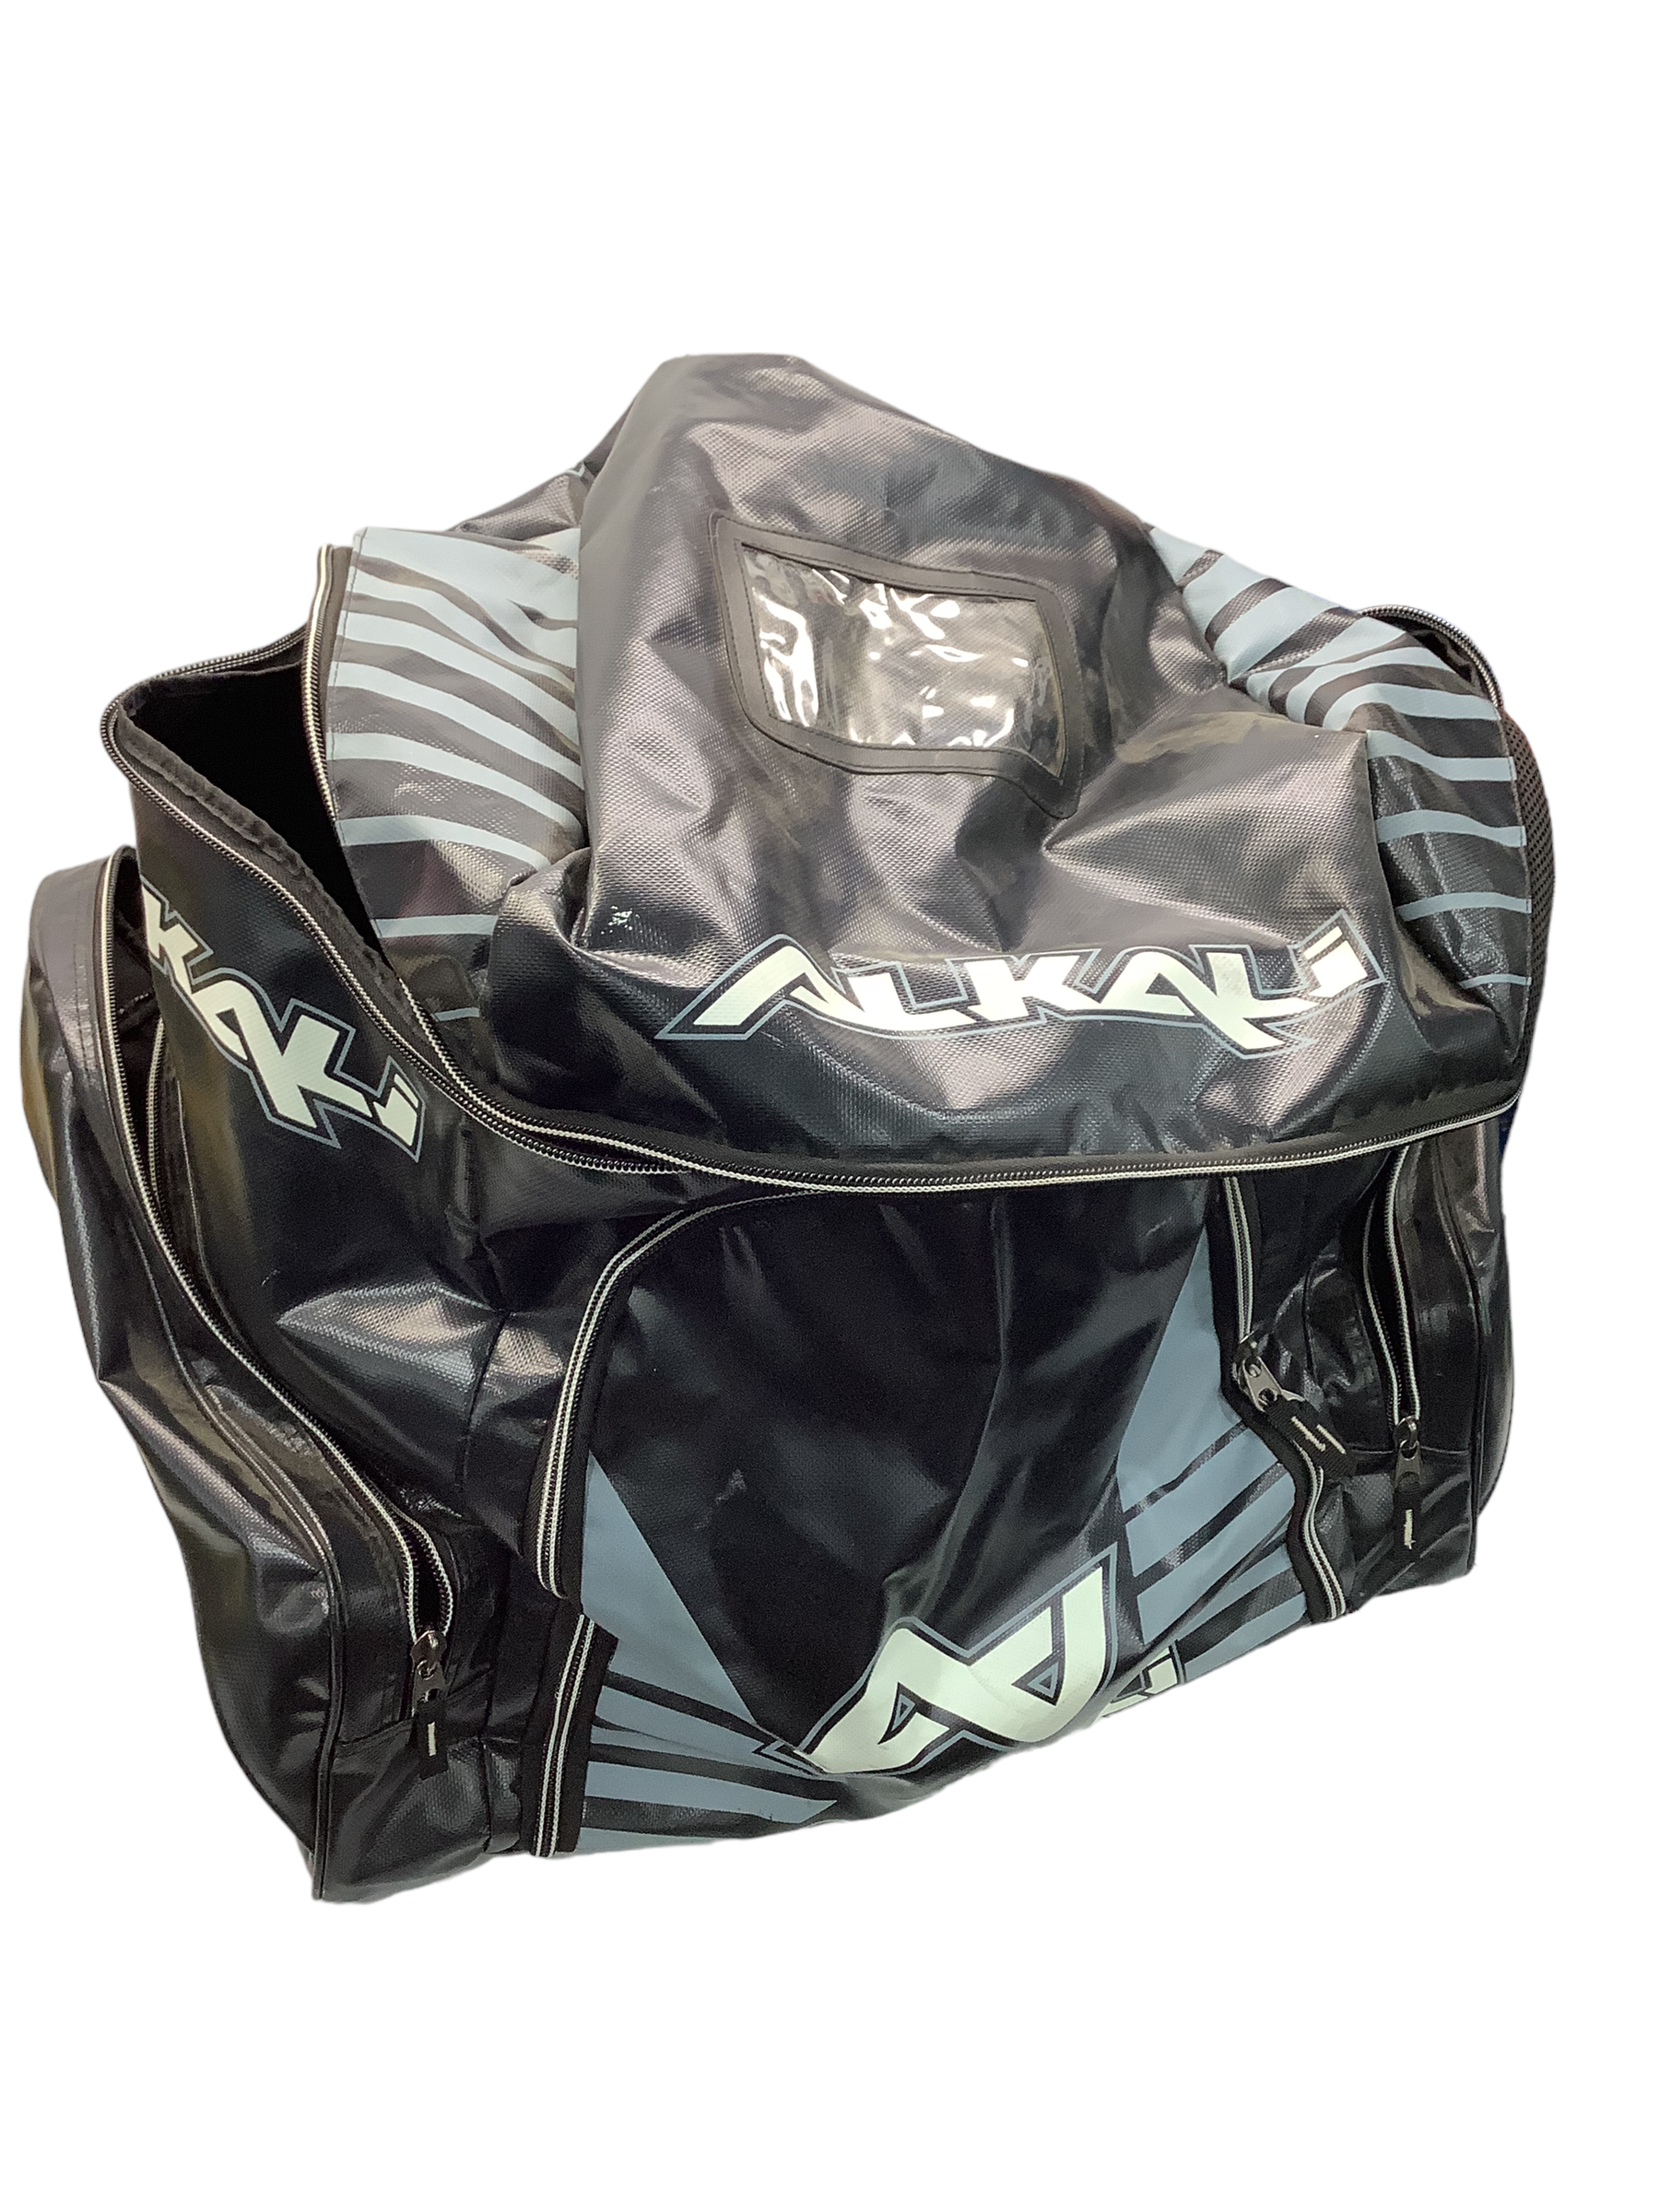 Used Alkali Hockey Equipment Bags Hockey Equipment Bags